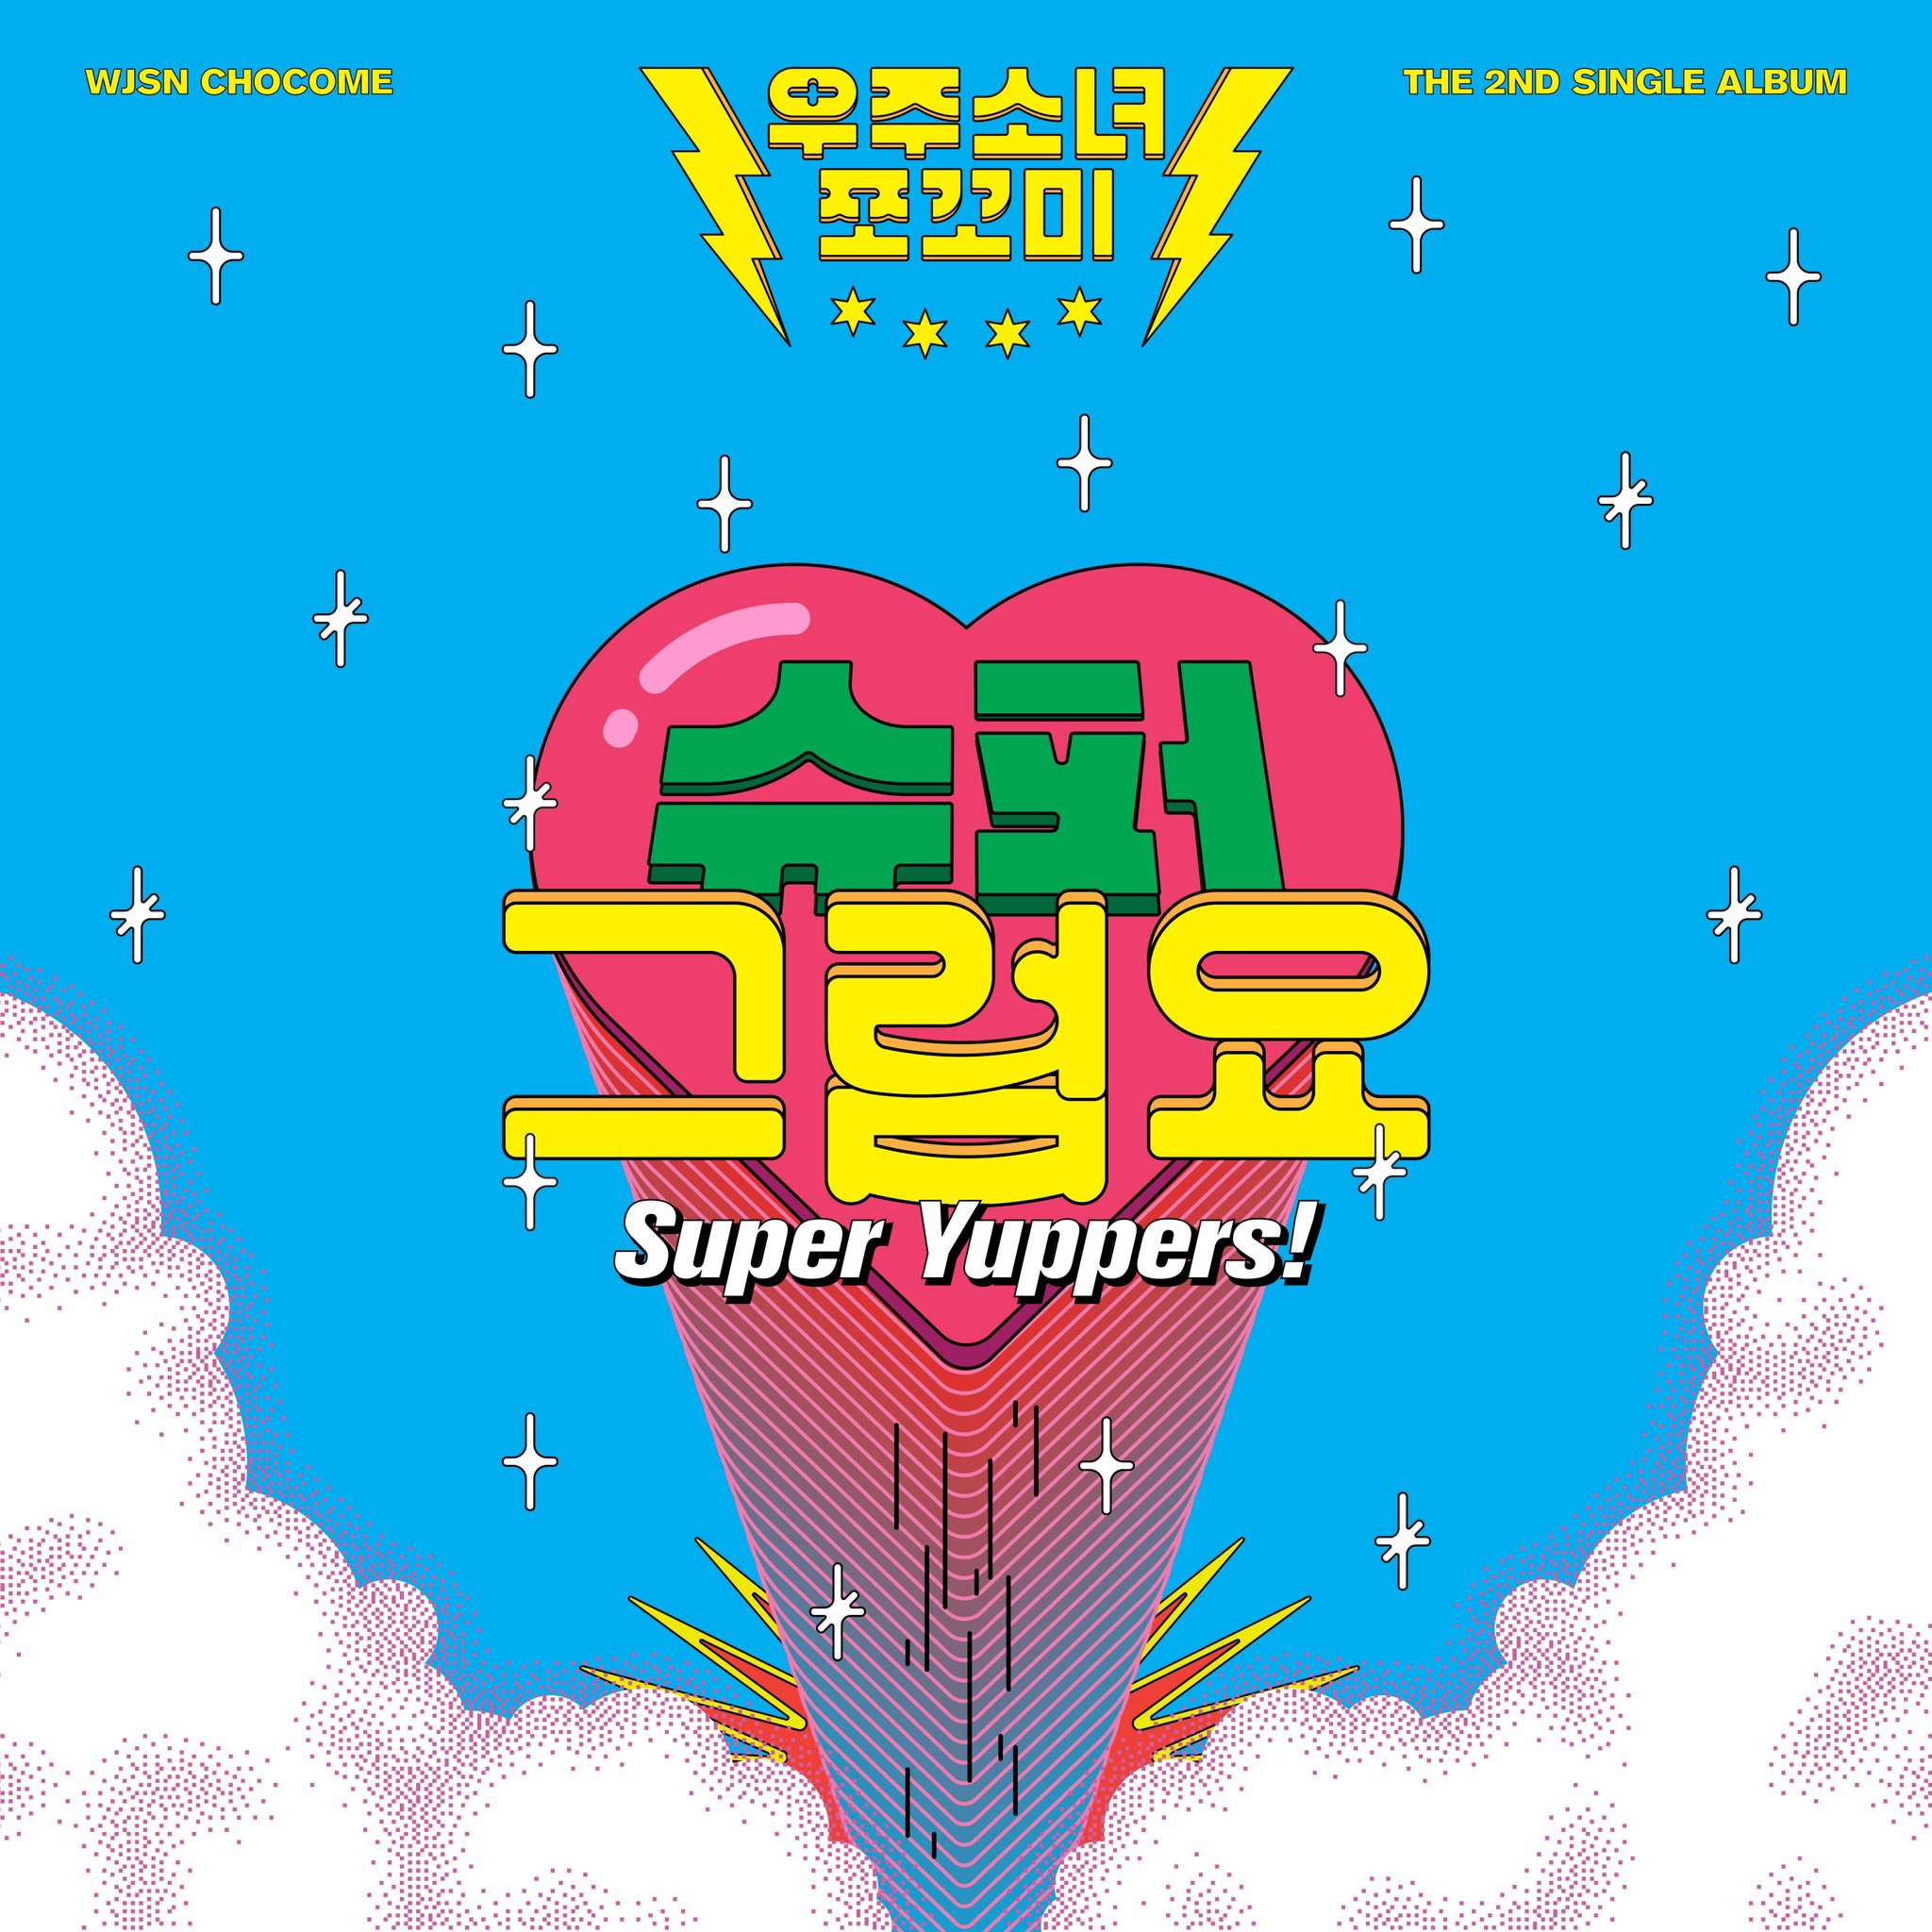 WJSN Chocome Super Yuppers! - Single Album cover artwork